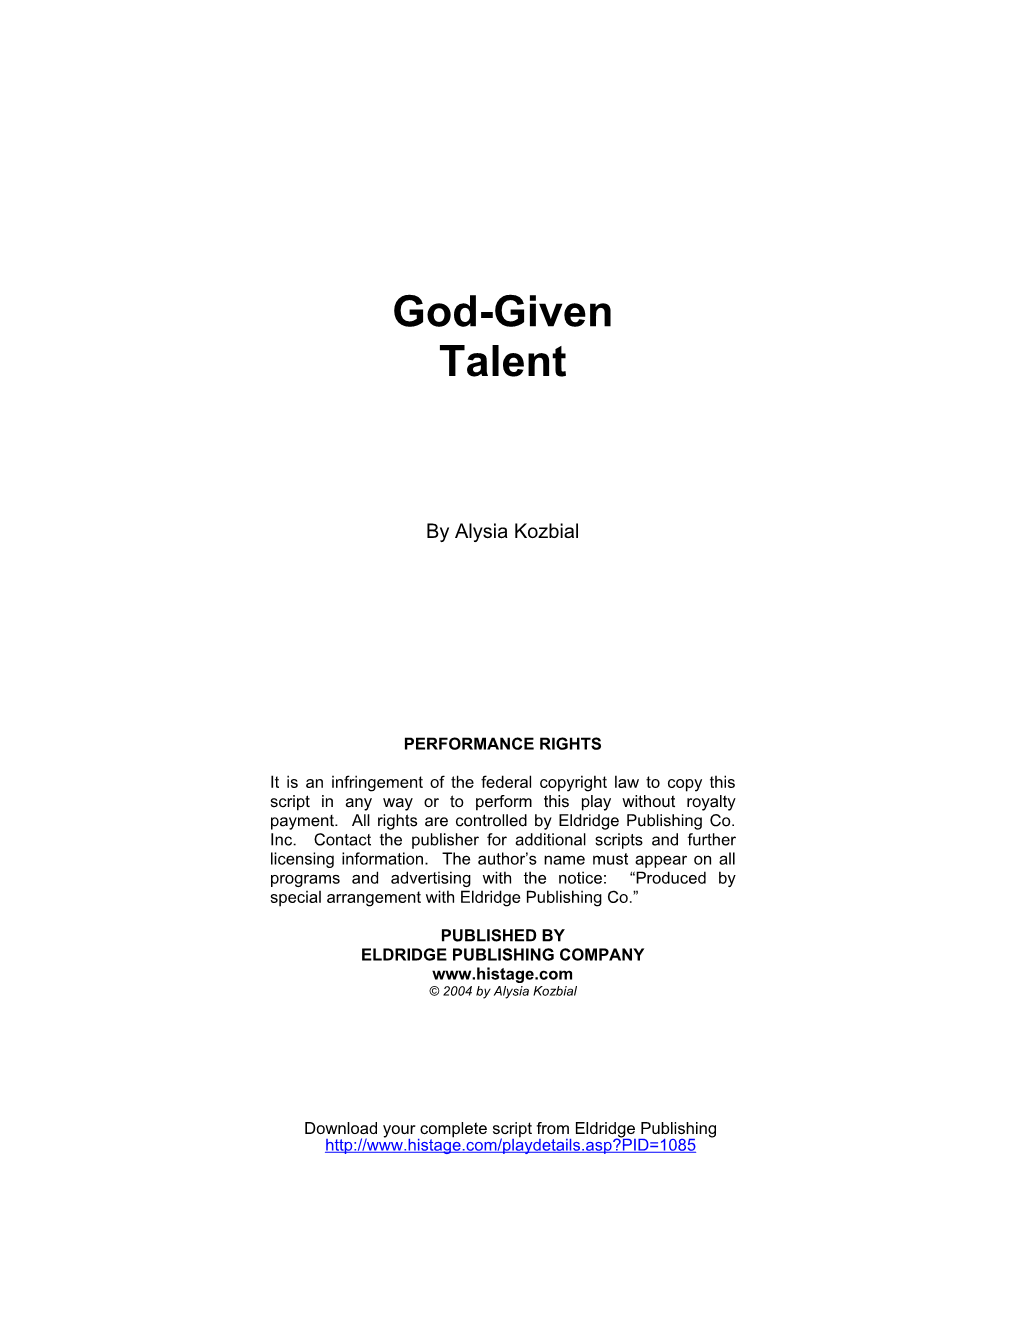 God-Given Talent